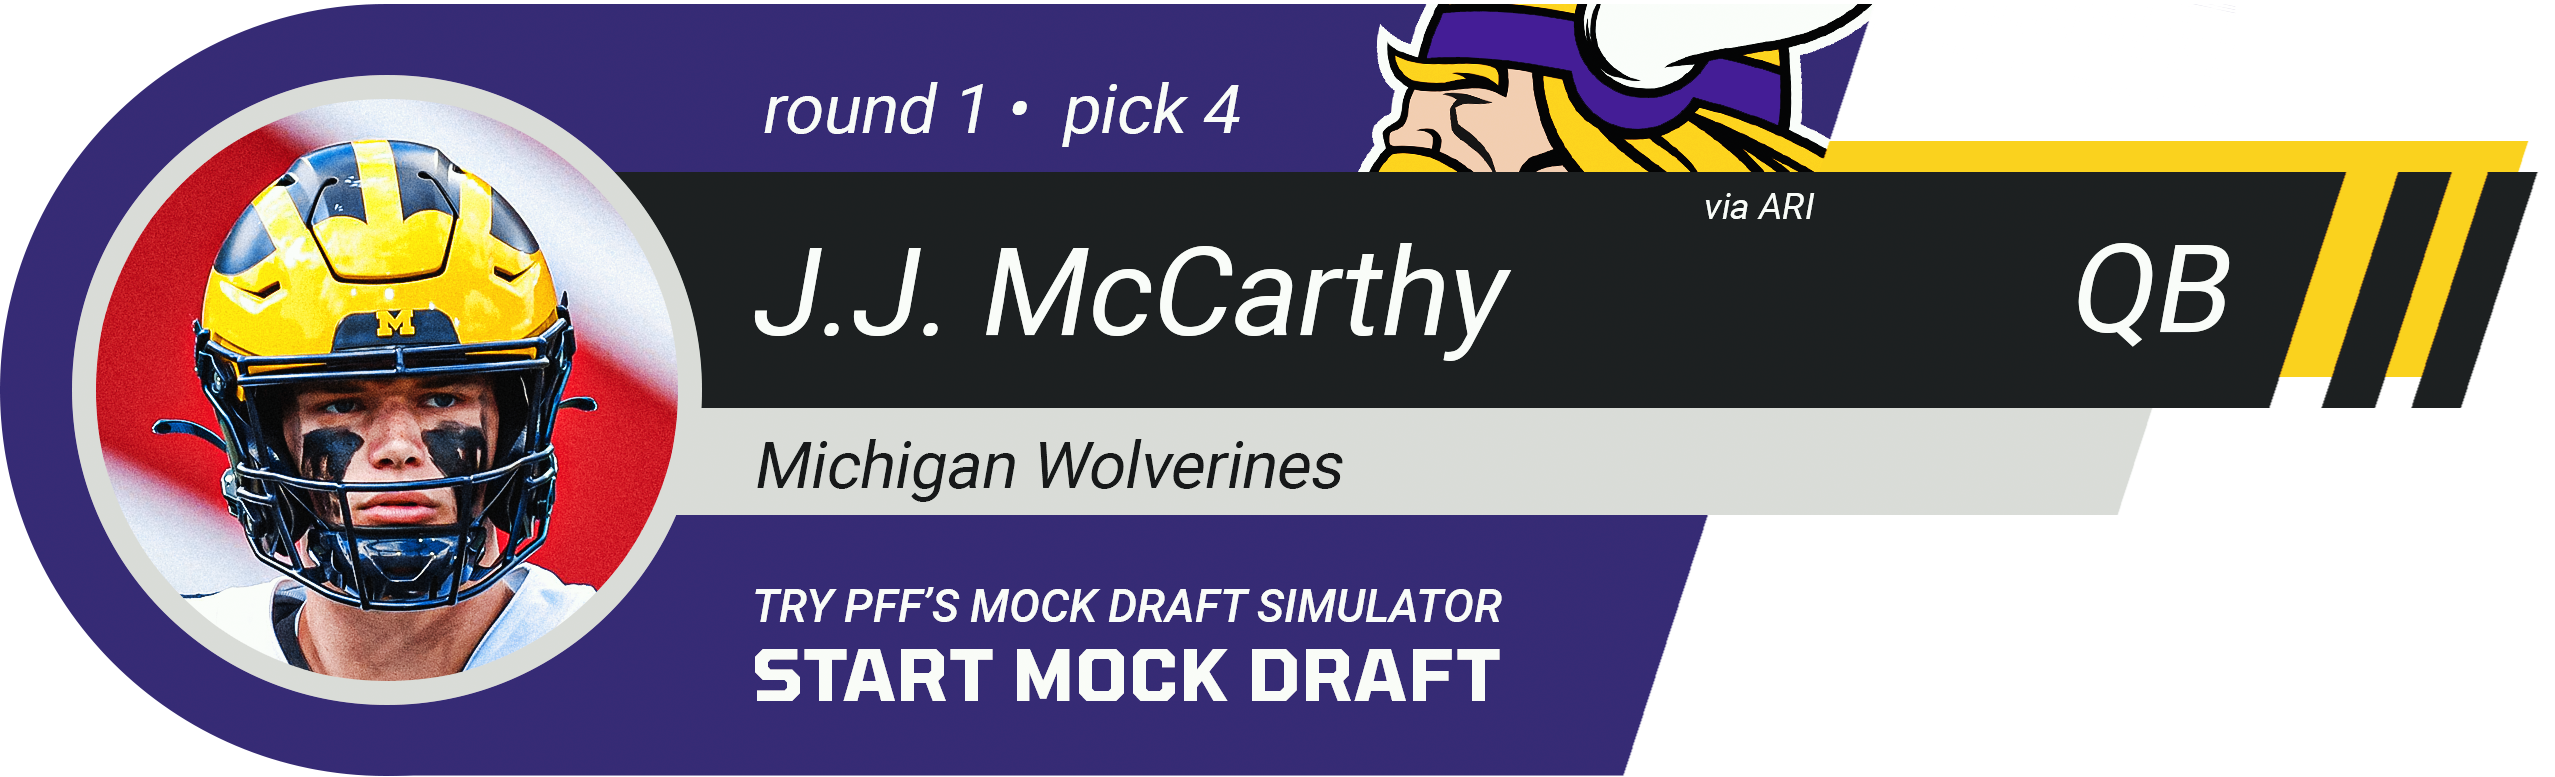 4. Minnesota Vikings: QB J.J. McCarthy, Michigan